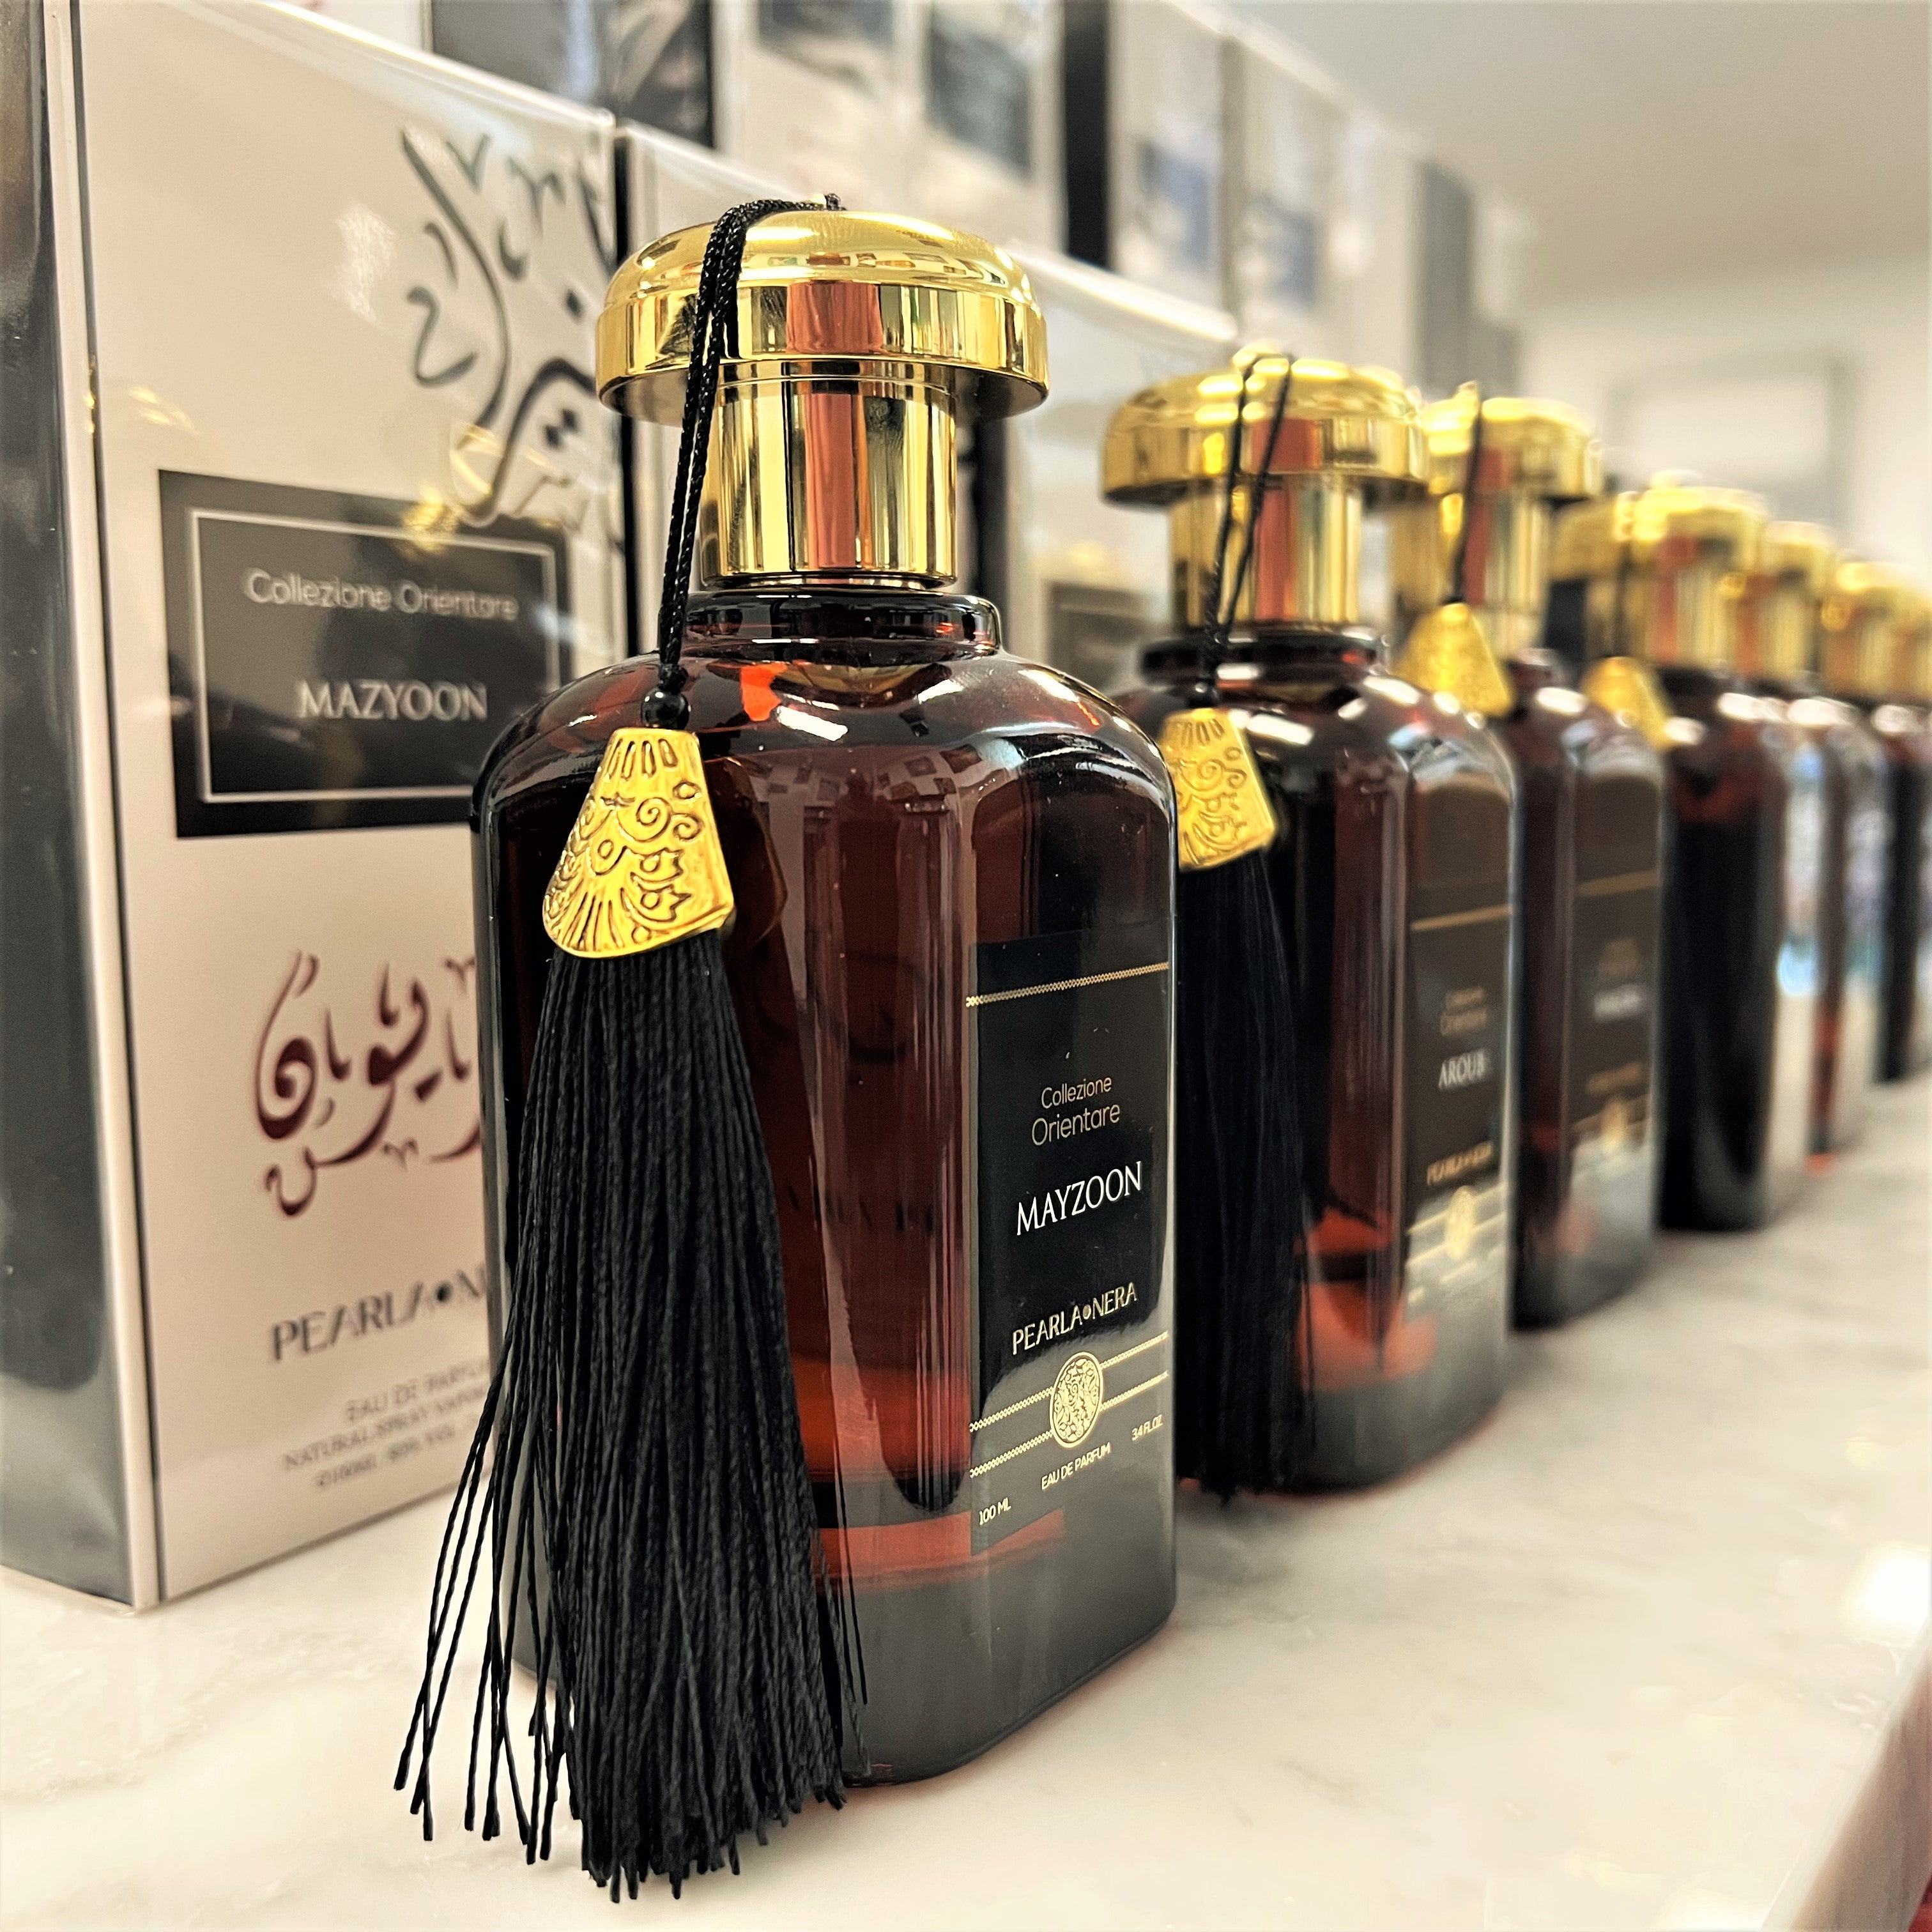 What's The Best Vanilla Perfume? - Maison d'Orient